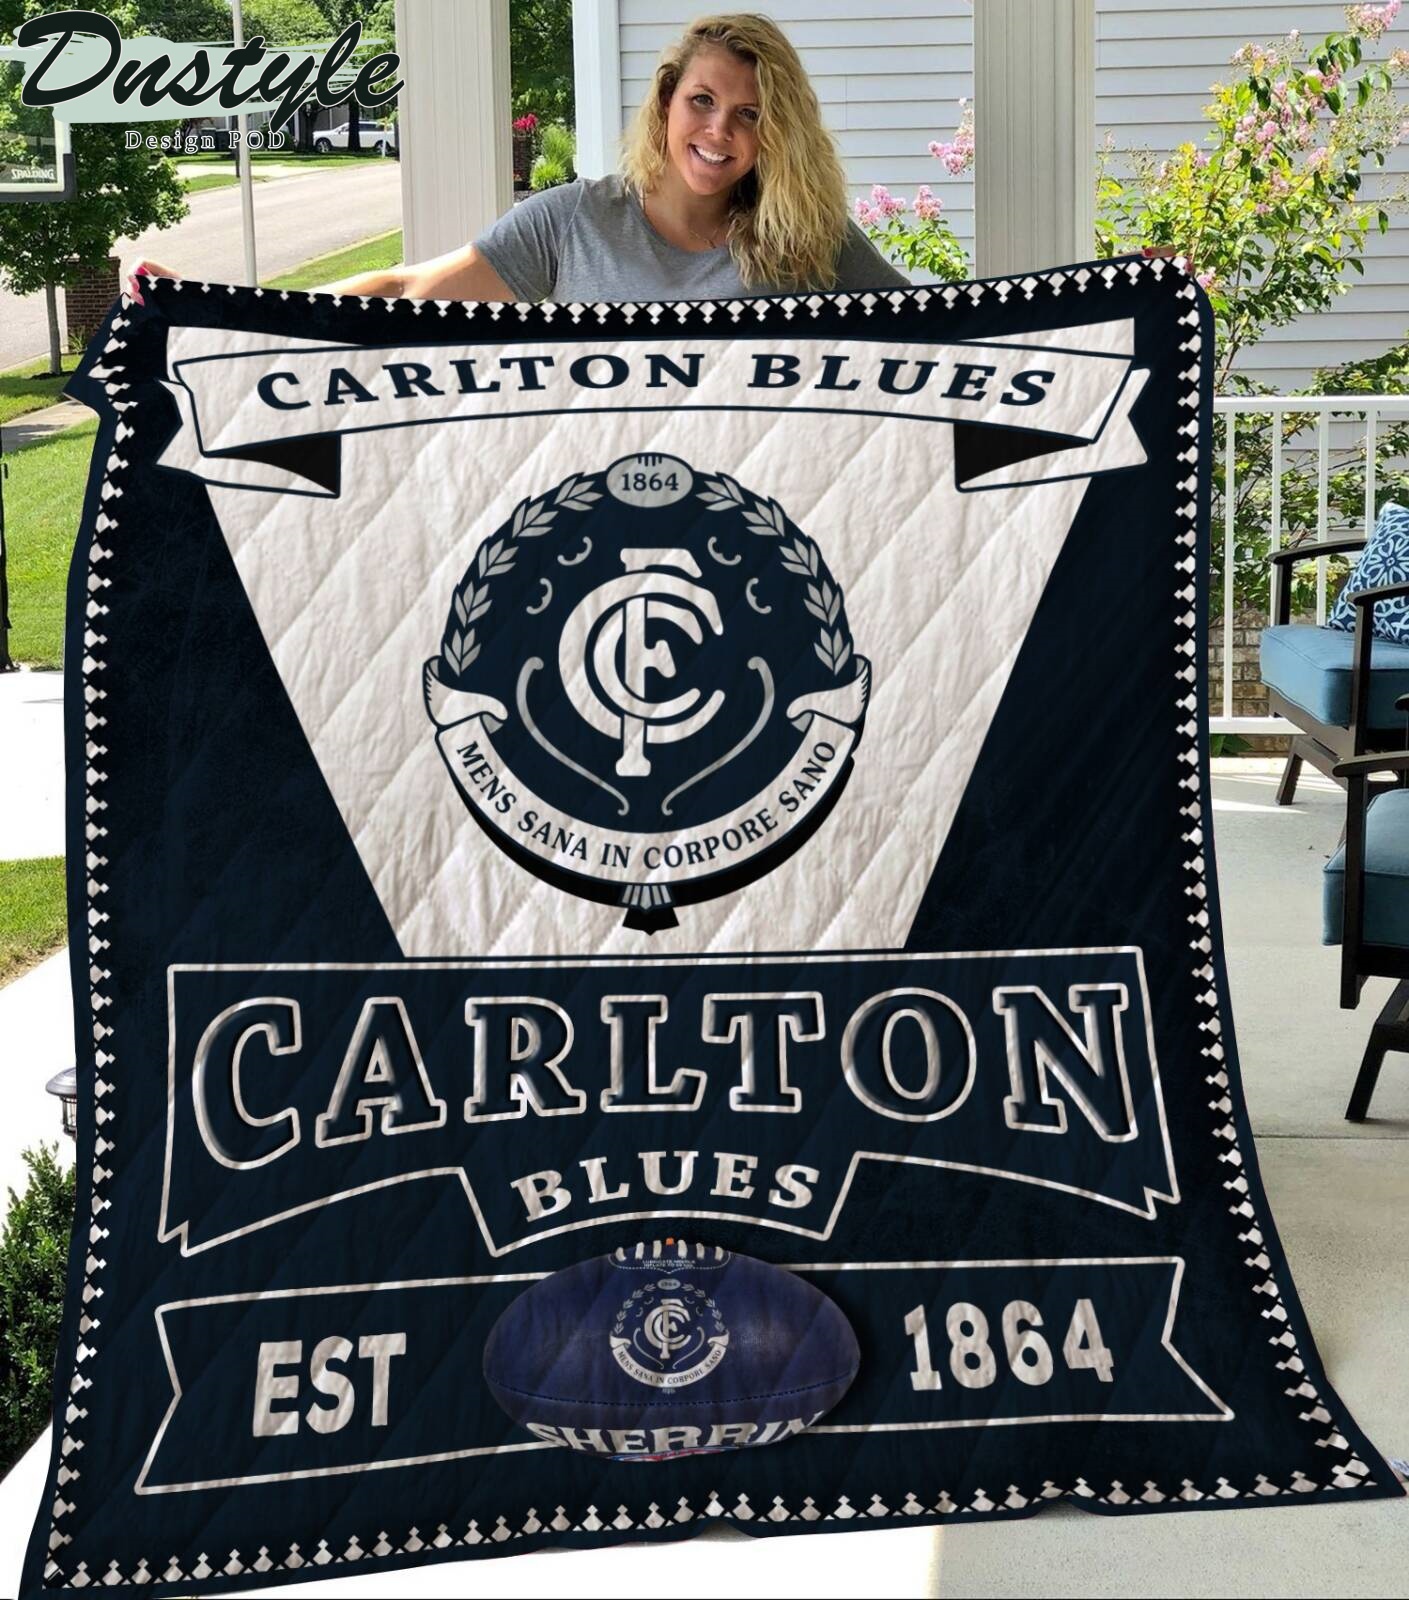 Carlton Blues Mens Sana In Corpore Sano Est 1864 Quilt Blanket